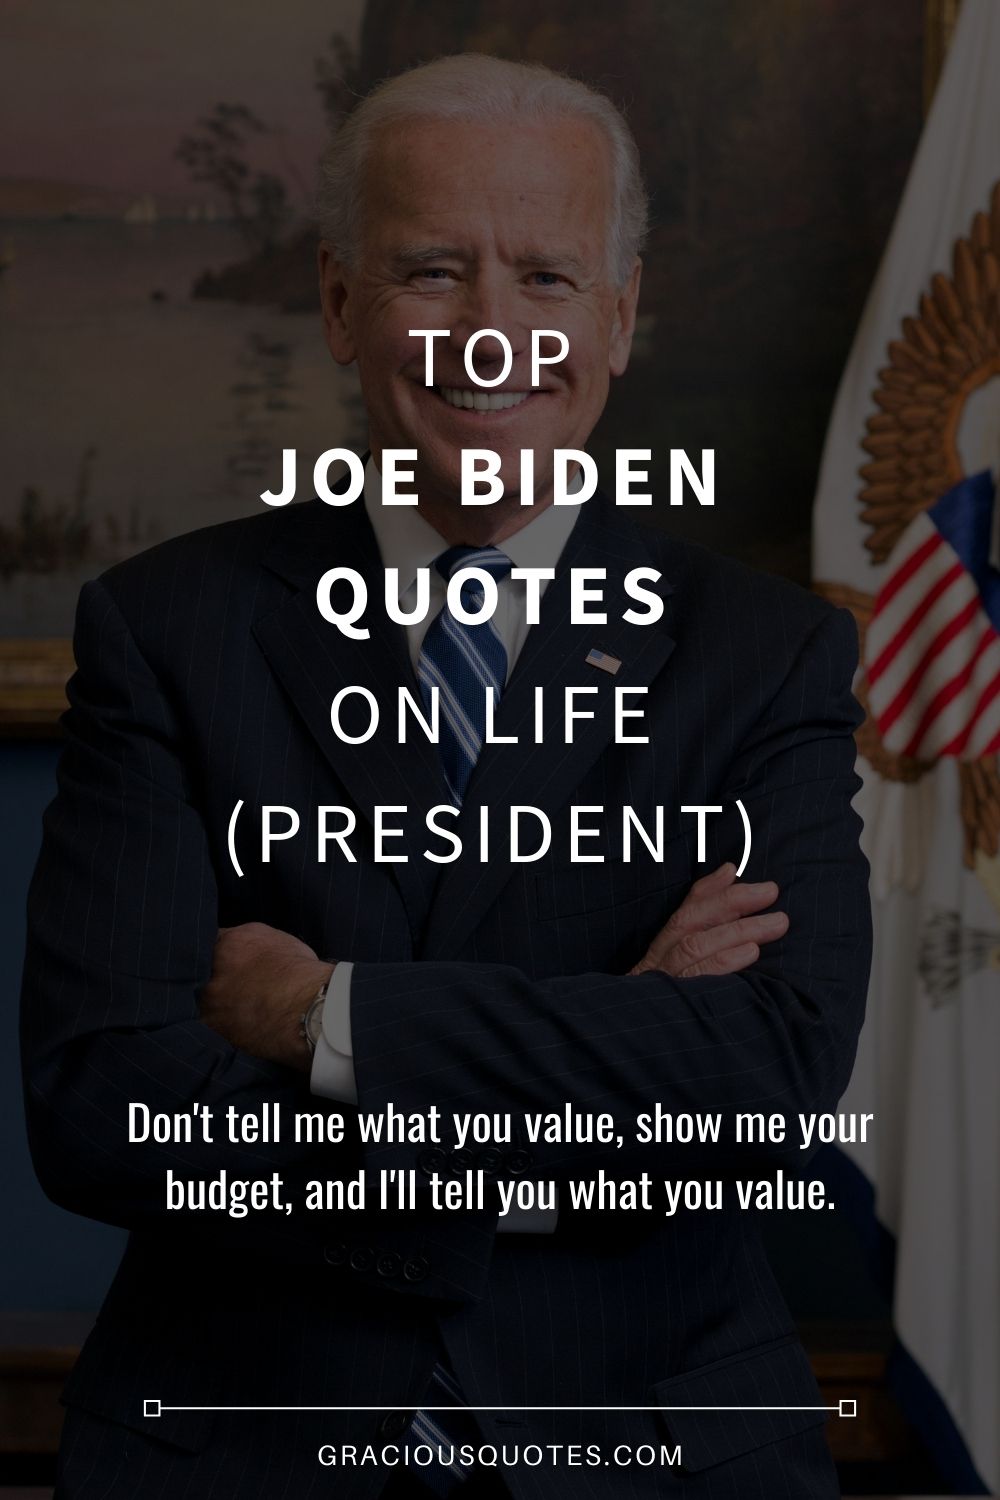 Top Joe Biden Quotes on Life (PRESIDENT) - Gracious Quotes